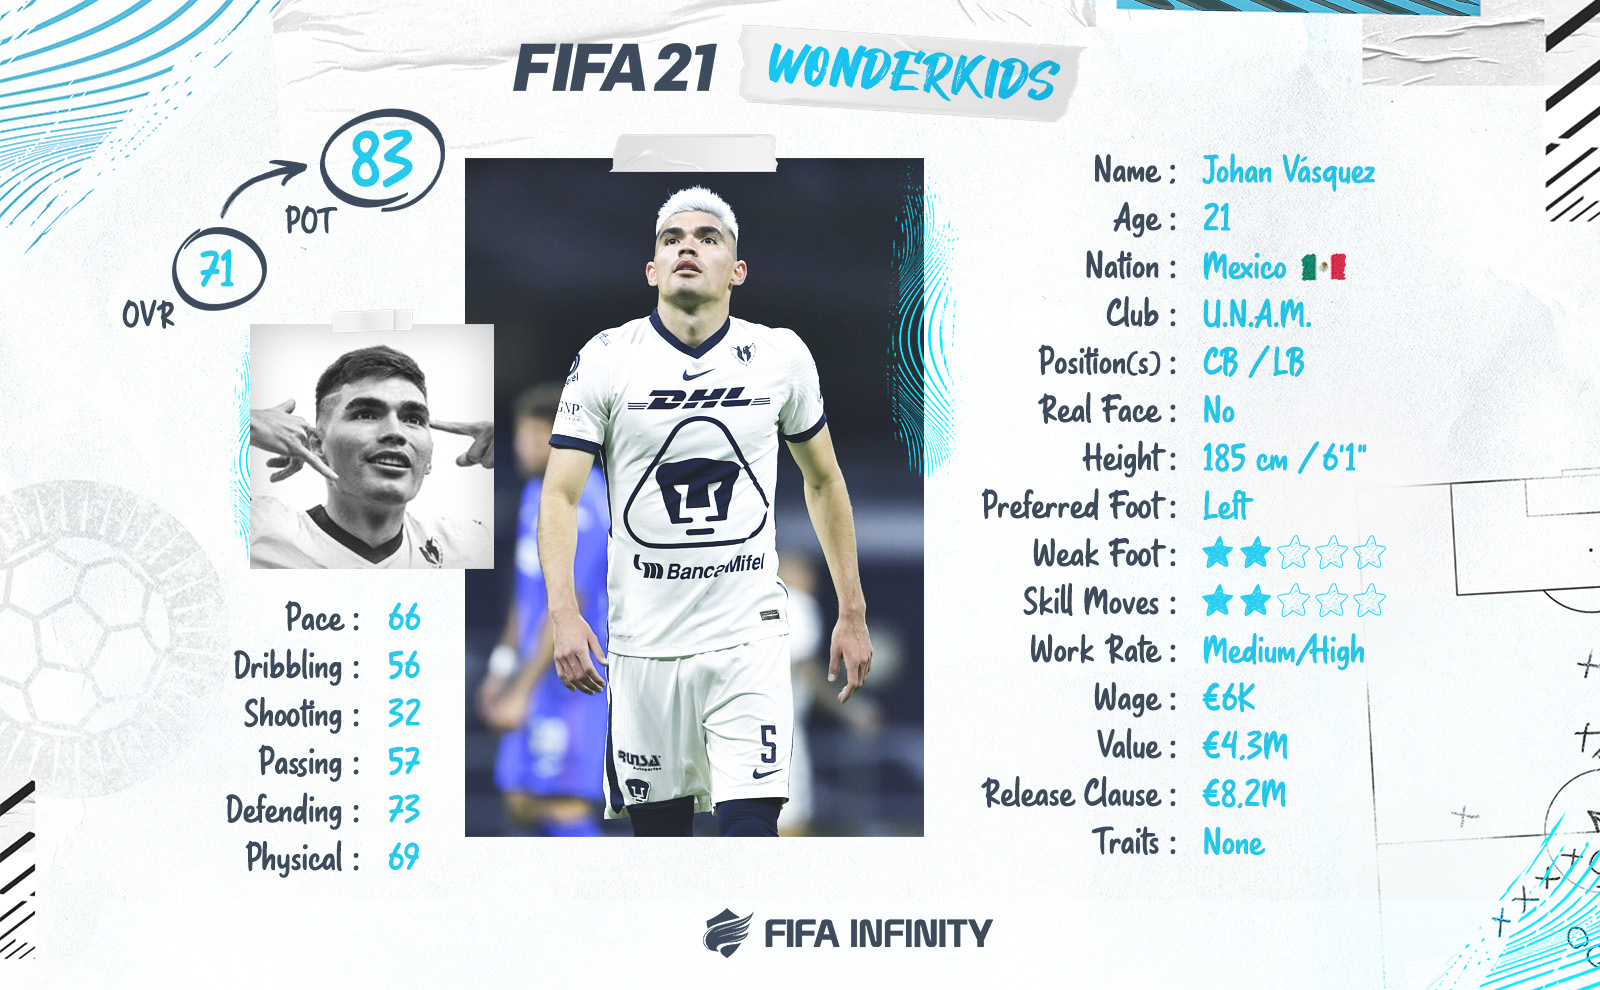 FIFA 21: Ranking the Best 5 Wonderkids From Liga MX